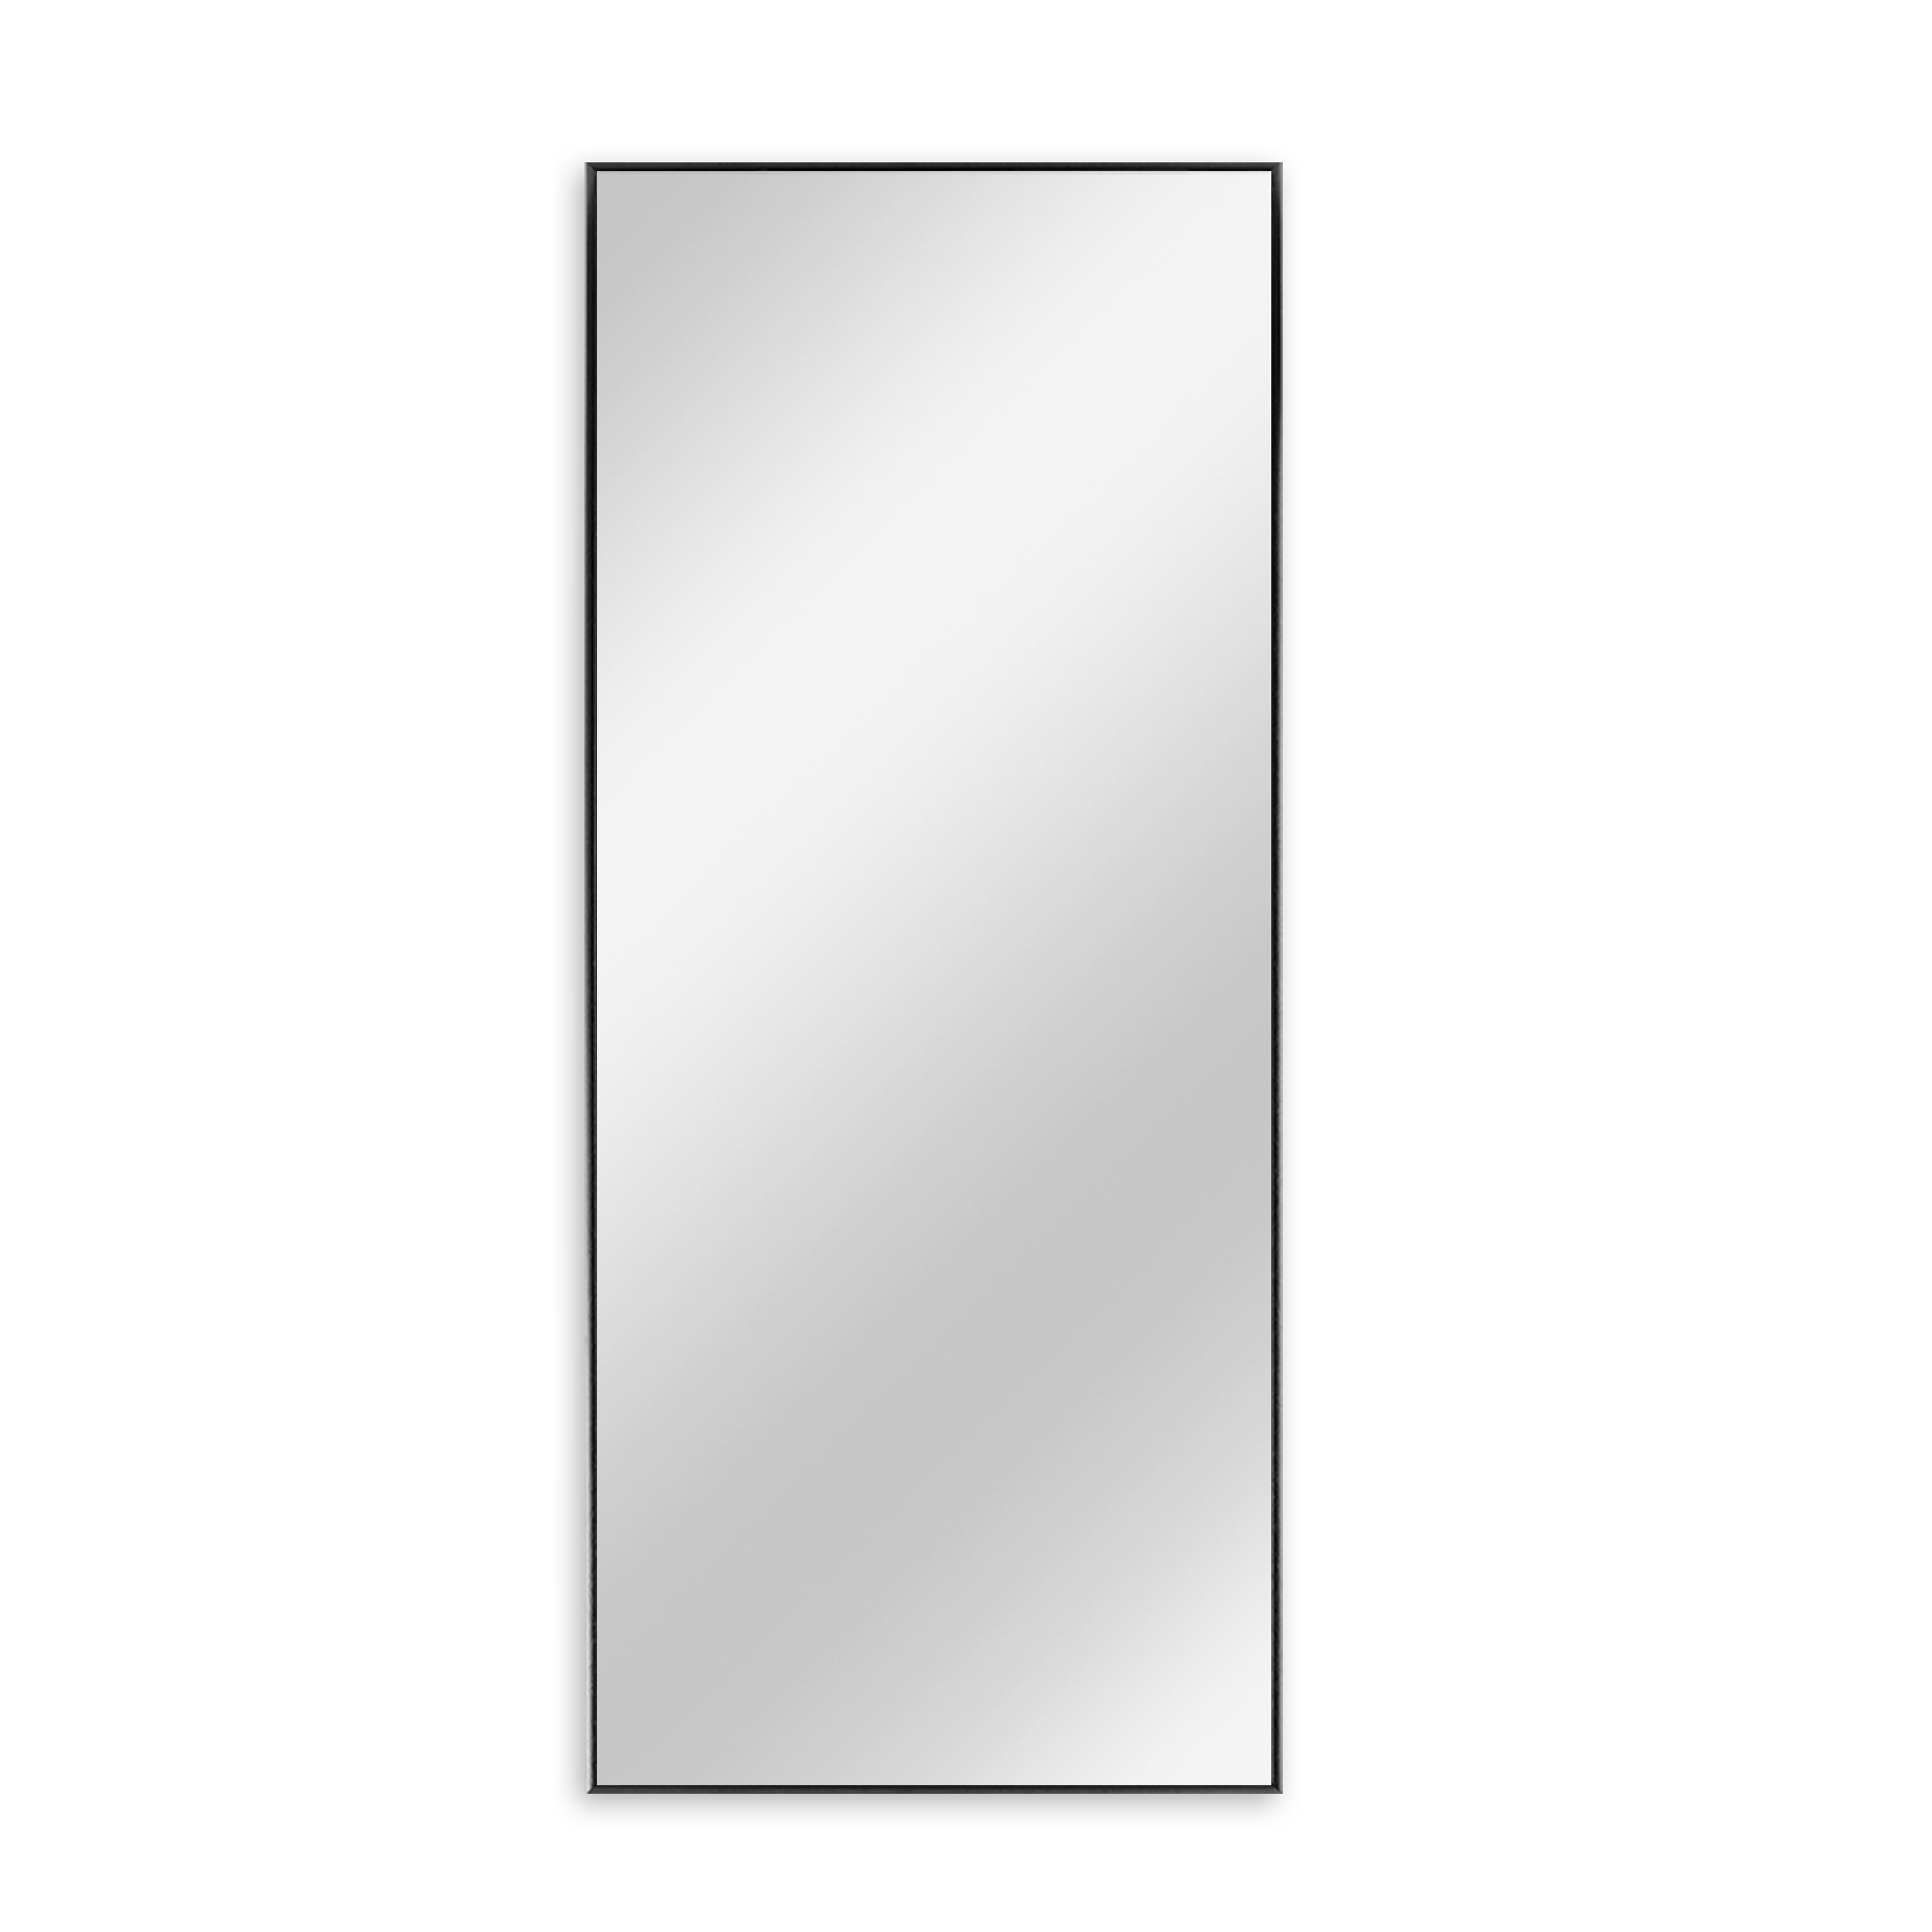 Minimal Black Rectangular Wall Mirror